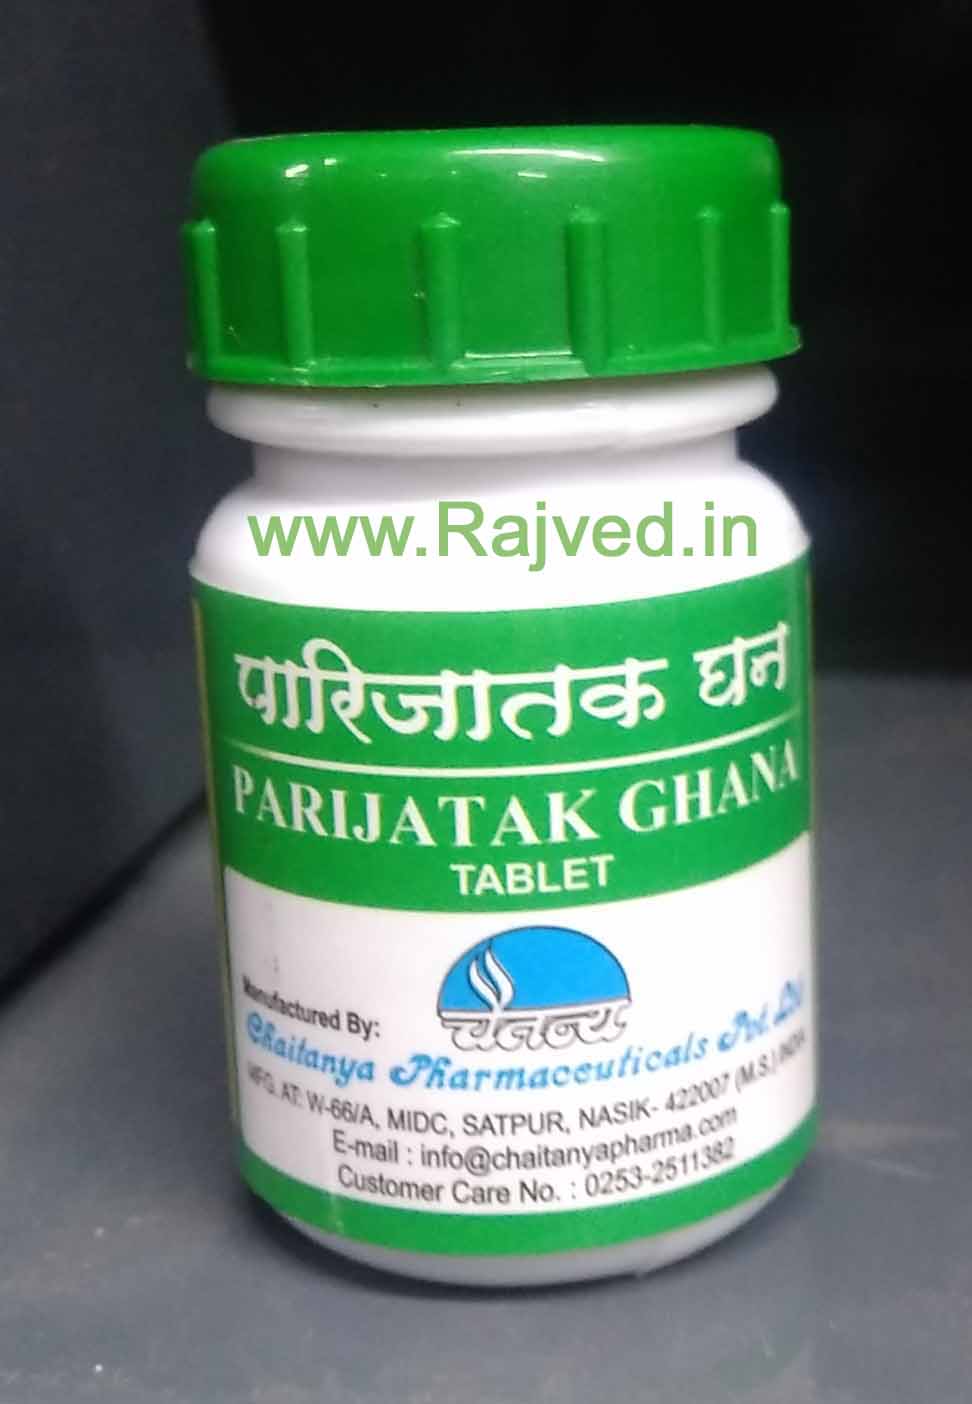 parijatak ghana 500 tab upto 20% off free shipping chaitanya pharmaceuticals